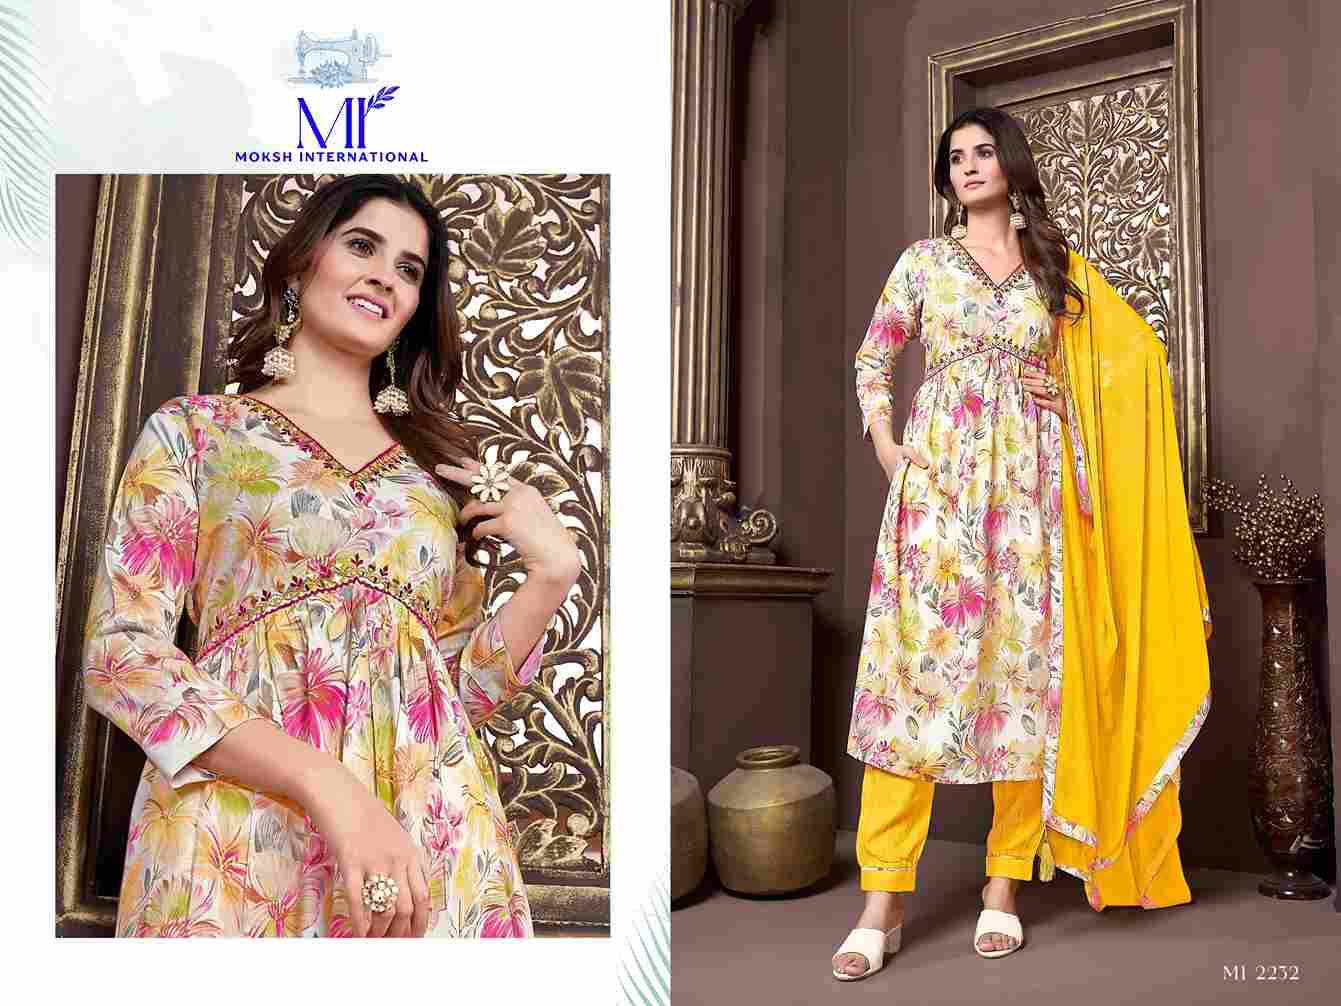 Afgani Alia Vol-3 By Moksh International 2232 To 2234 Series Beautiful Suits Colorful Stylish Fancy Casual Wear & Ethnic Wear Premium Rayon Dresses At Wholesale Price